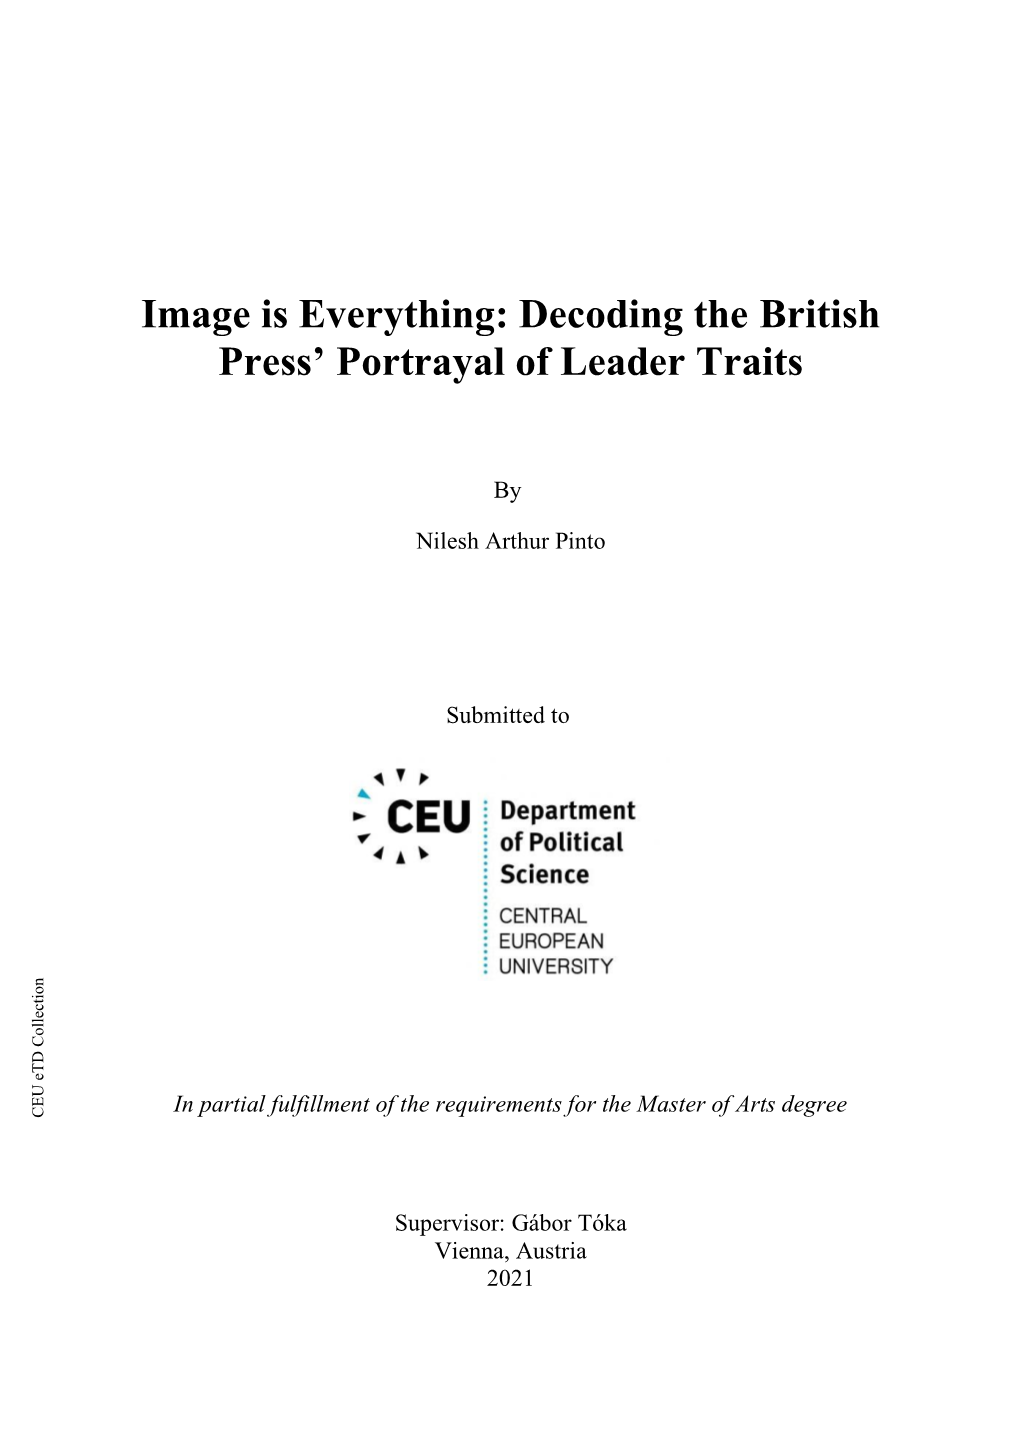 Decoding the British Press' Portrayal of Leader Traits